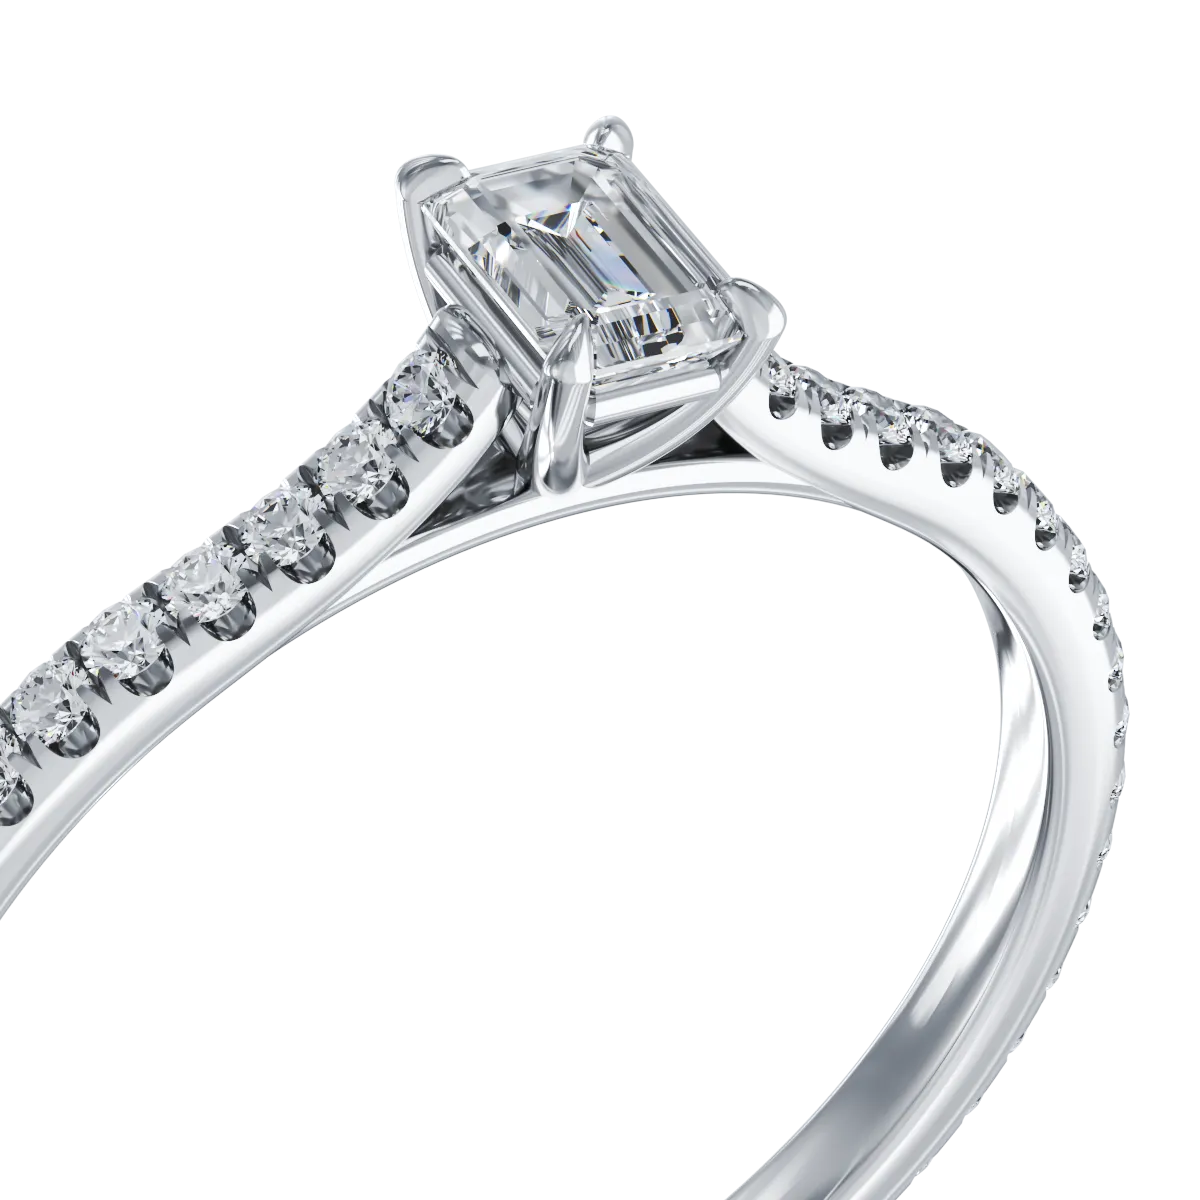 Platinum engagement ring with 0.19ct diamond and 0.195ct diamonds